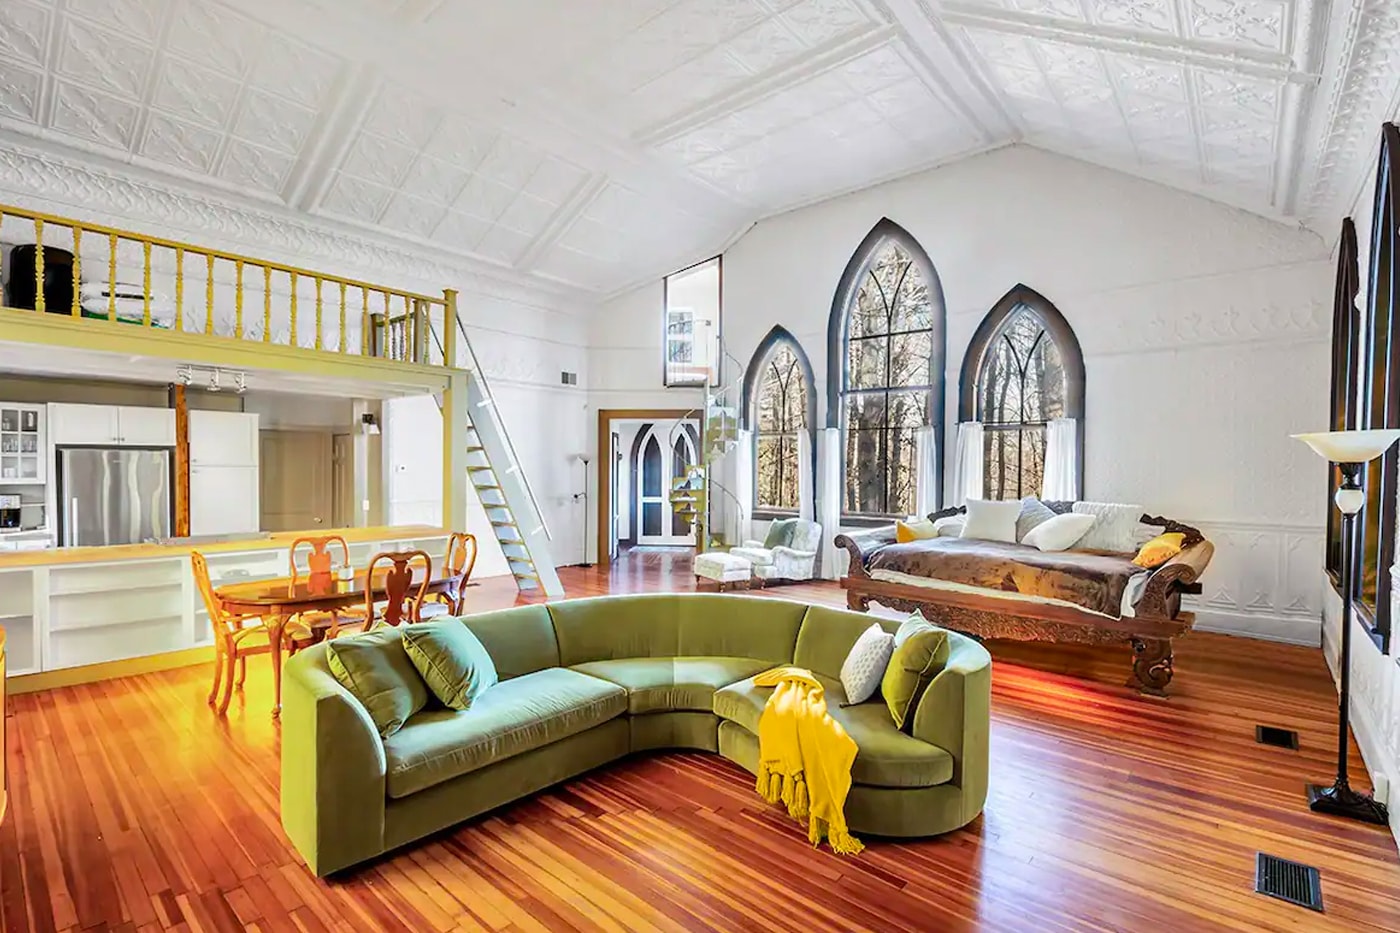 Airbnb Home Rental Woodstock New York Church Rustic Interior design